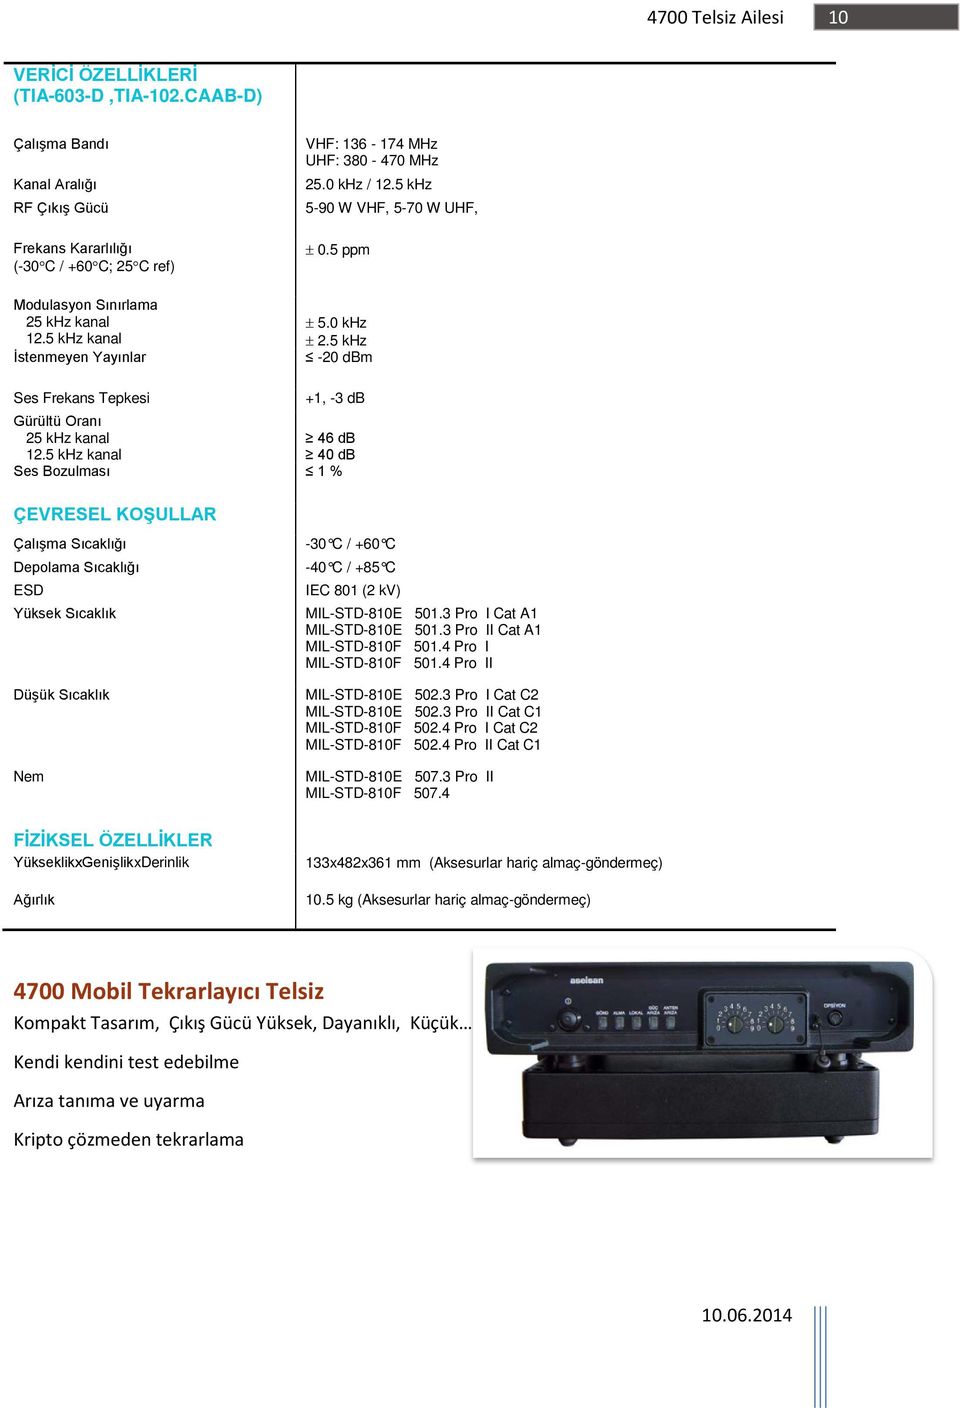 5 khz kanal +1, -3 db 46 db 40 db Ses Bozulması 1 % ÇEVRESEL KOŞULLAR Çalışma Sıcaklığı Depolama Sıcaklığı ESD Yüksek Sıcaklık Düşük Sıcaklık Nem -30 C / +60 C -40 C / +85 C IEC 801 (2 kv)